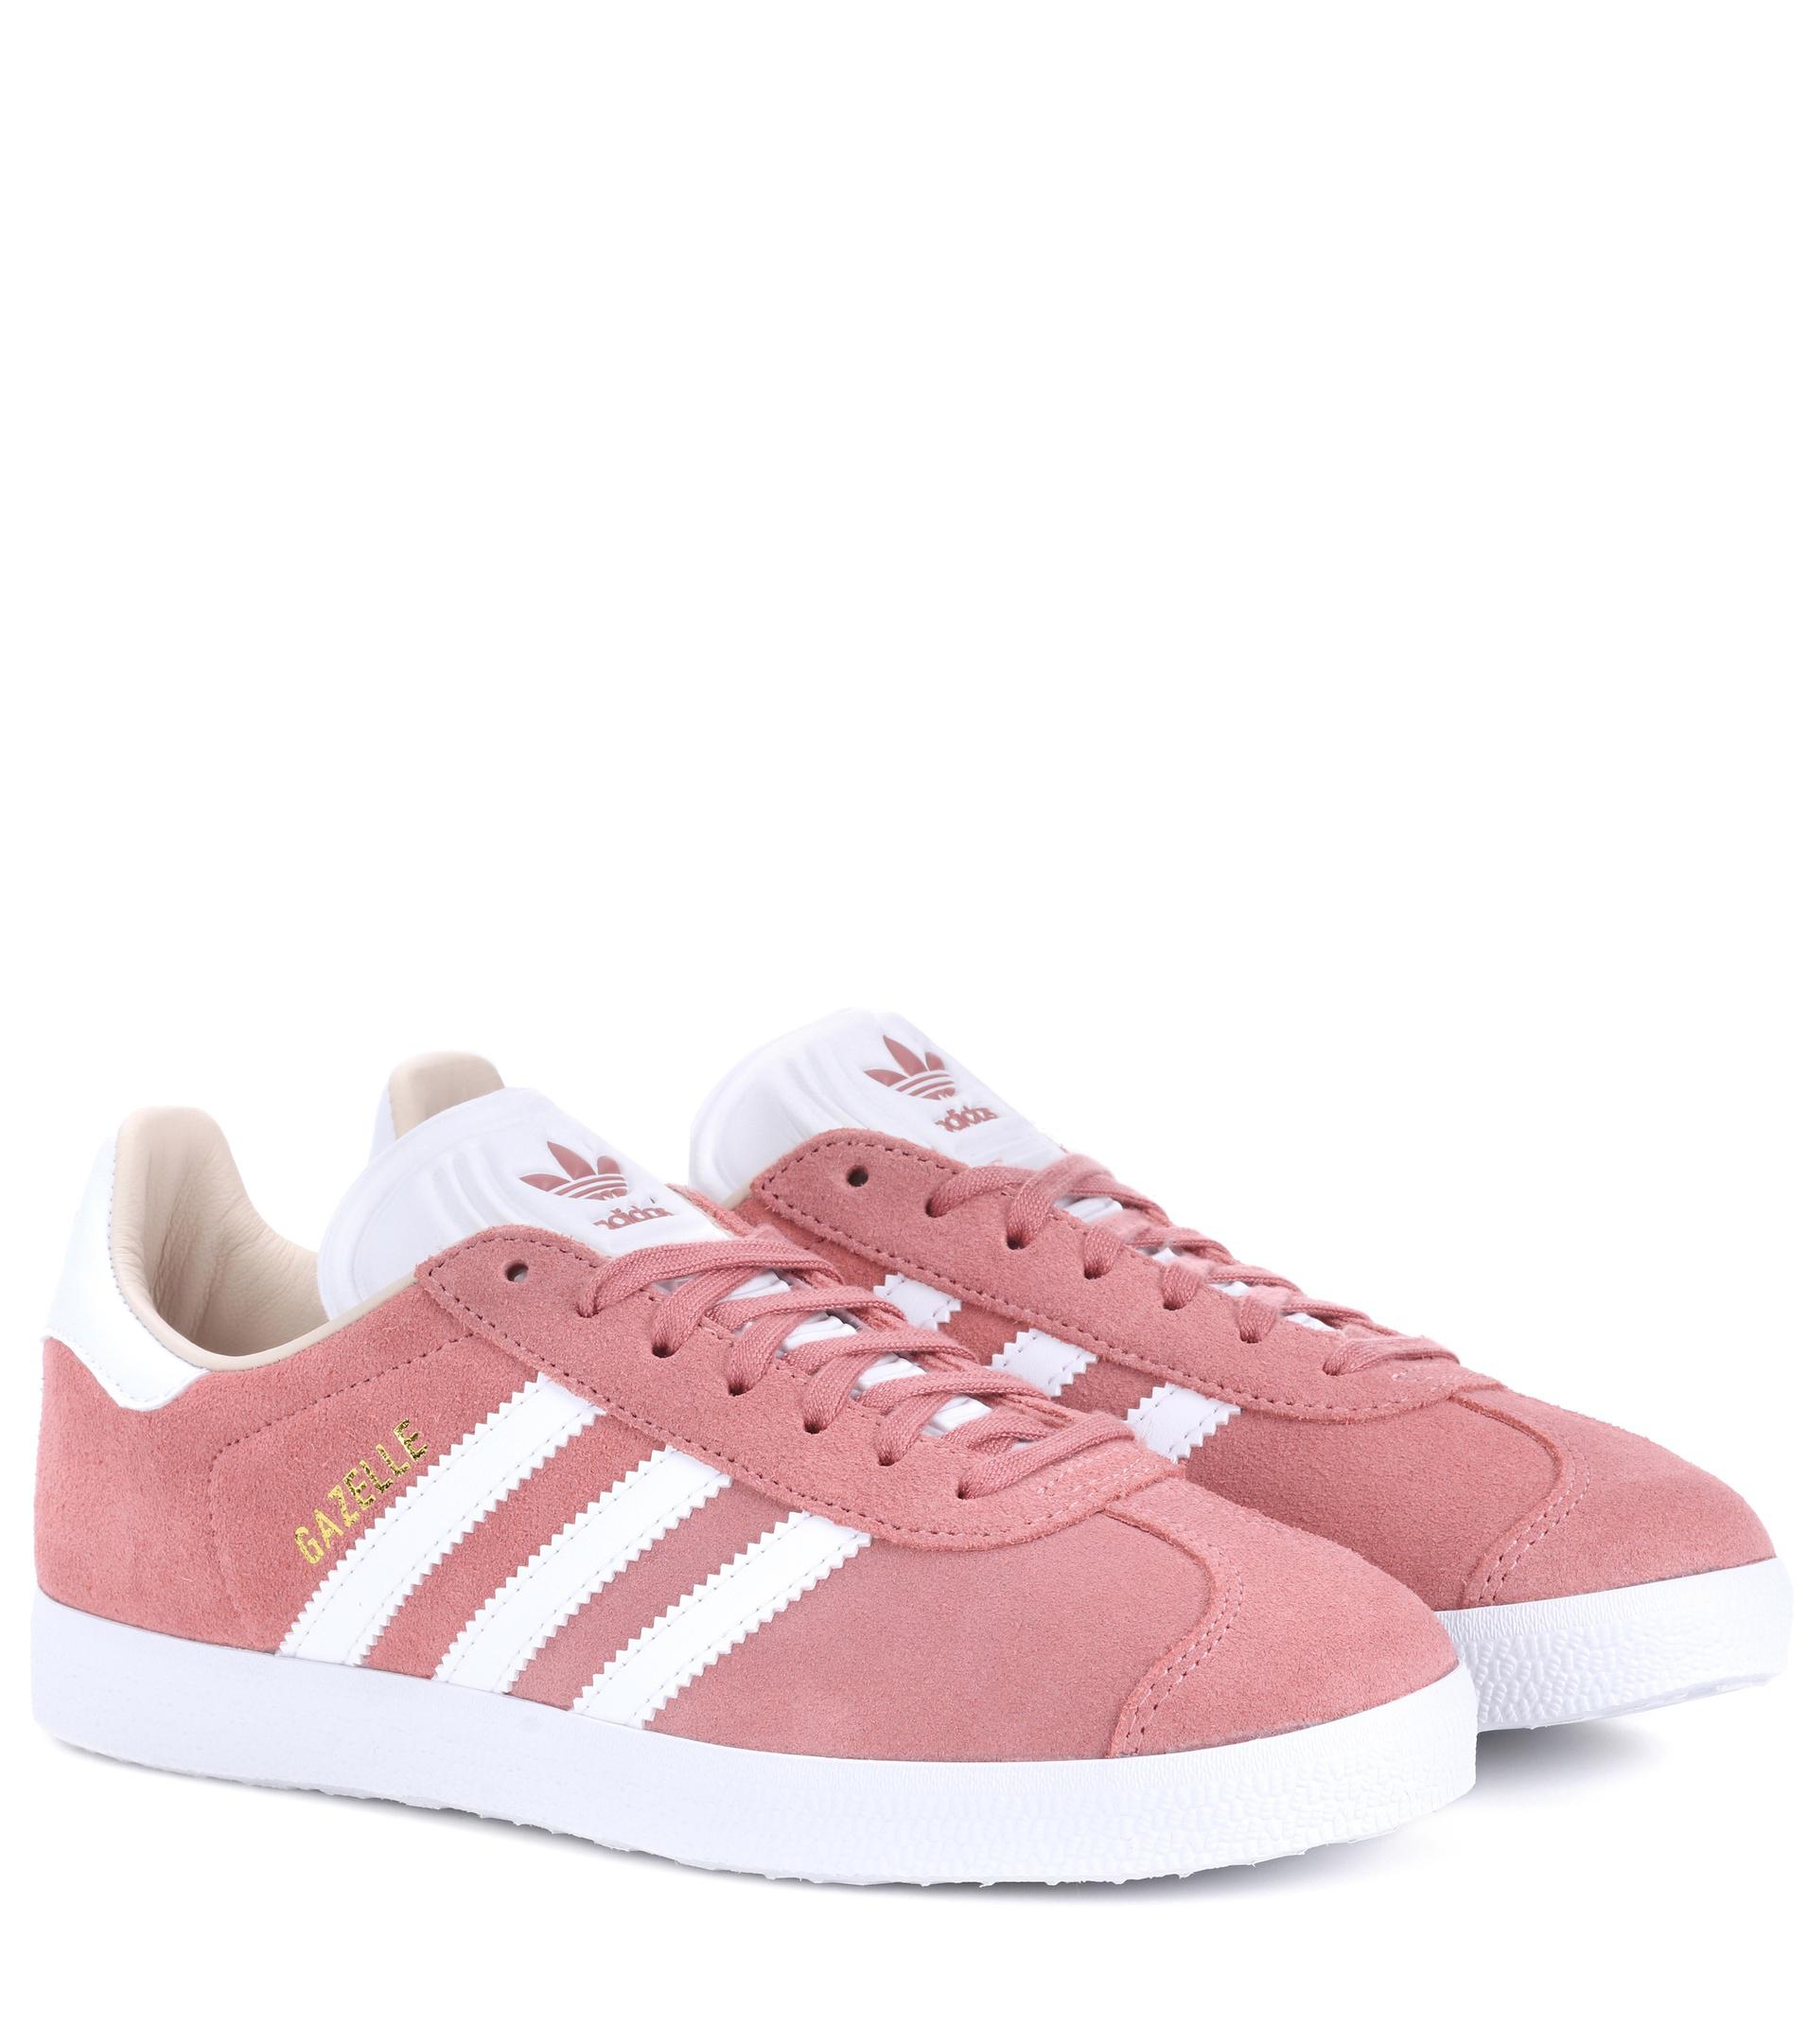 adidas Originals Gazelle Suede Sneakers in Pink - Lyst